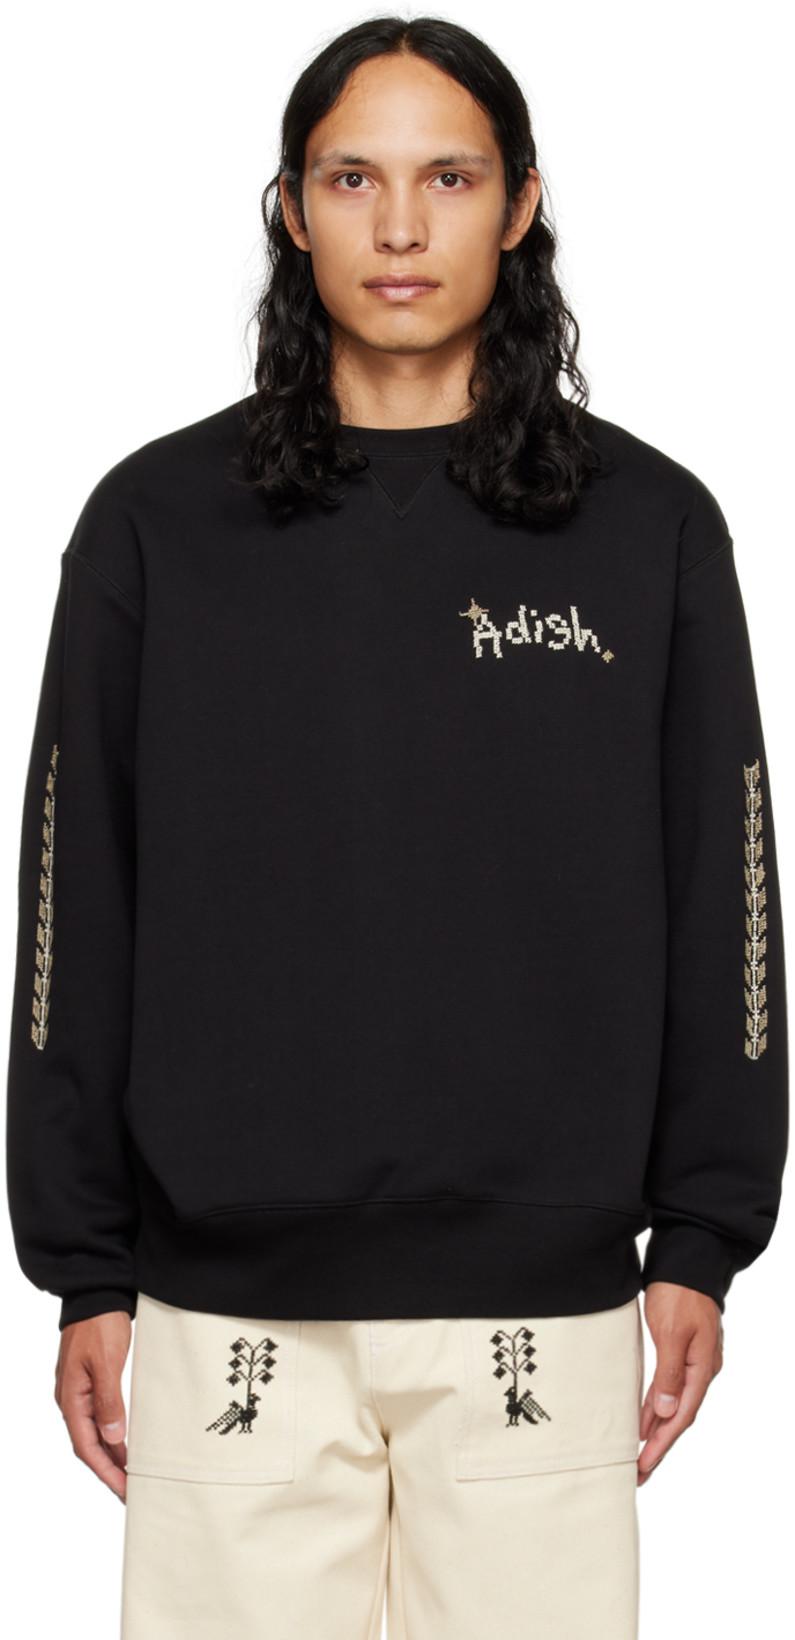 Black Tatreez Sweatshirt by ADISH